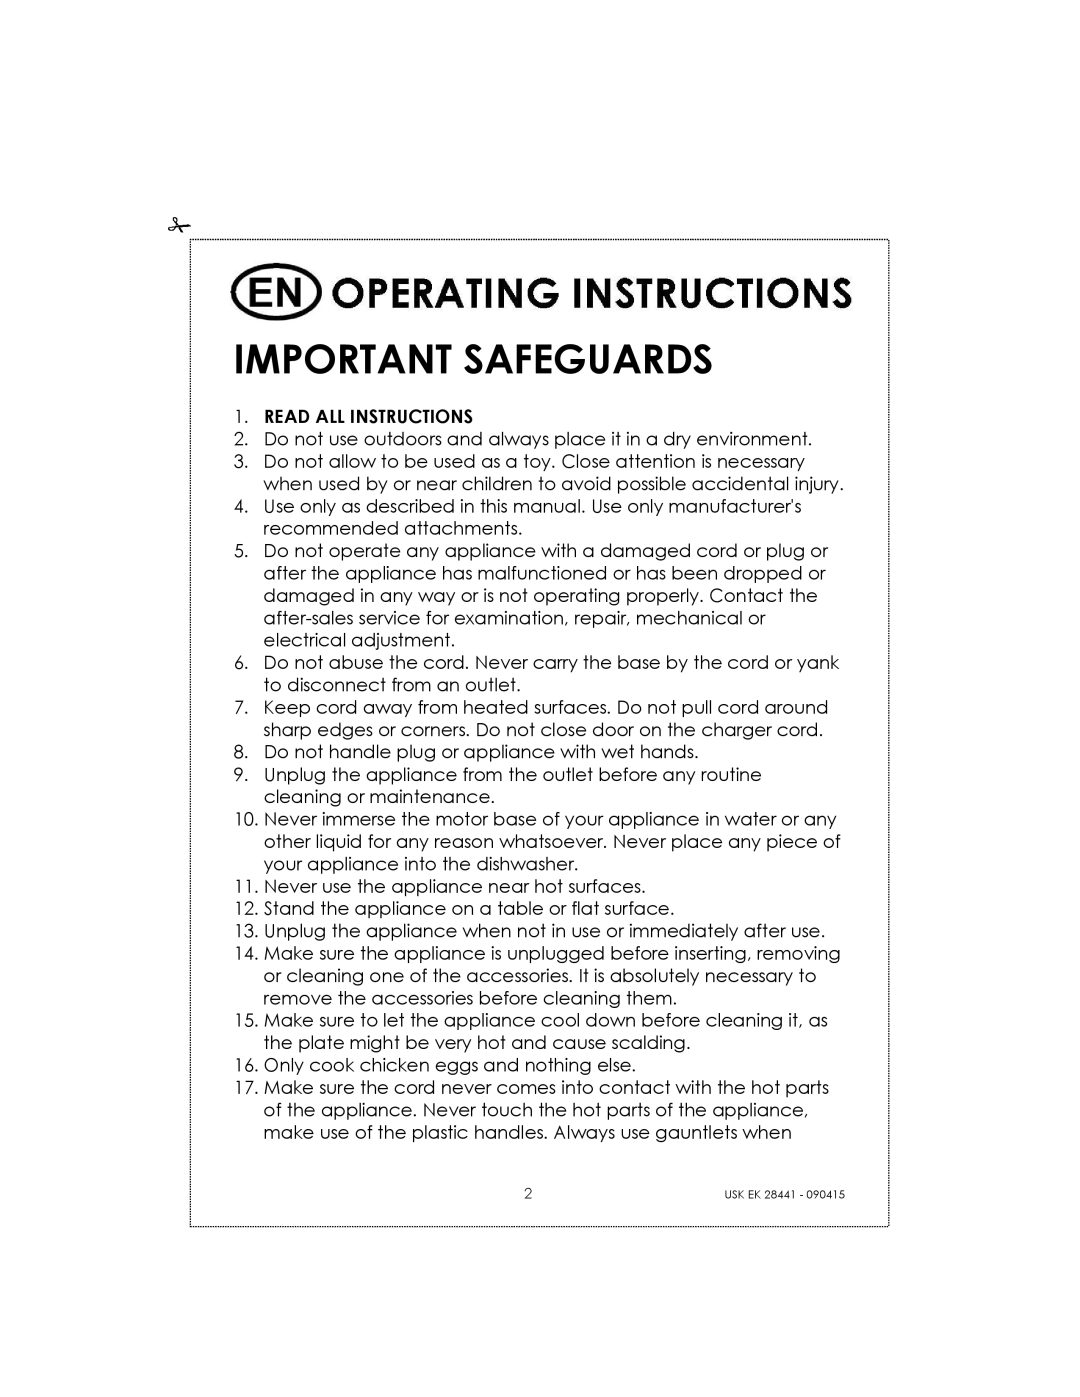 Kalorik USK EK 28441 manual Important Safeguards 